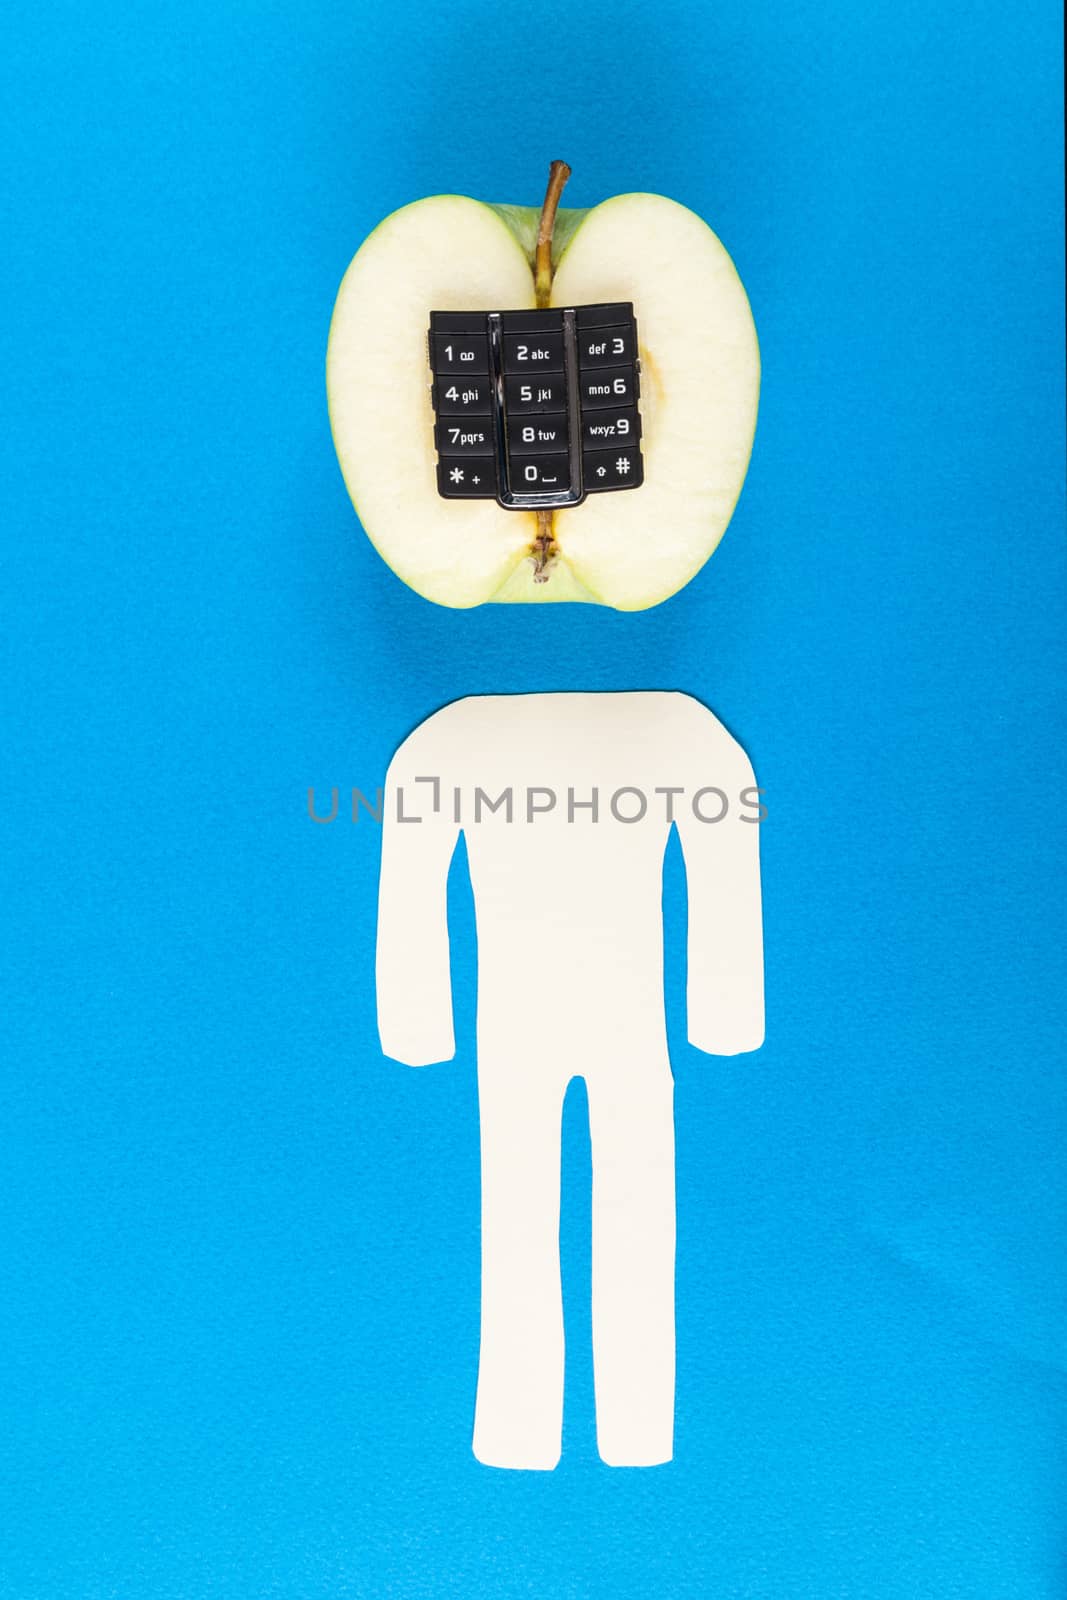 Alphanumeric apple with humanoid body by andongob